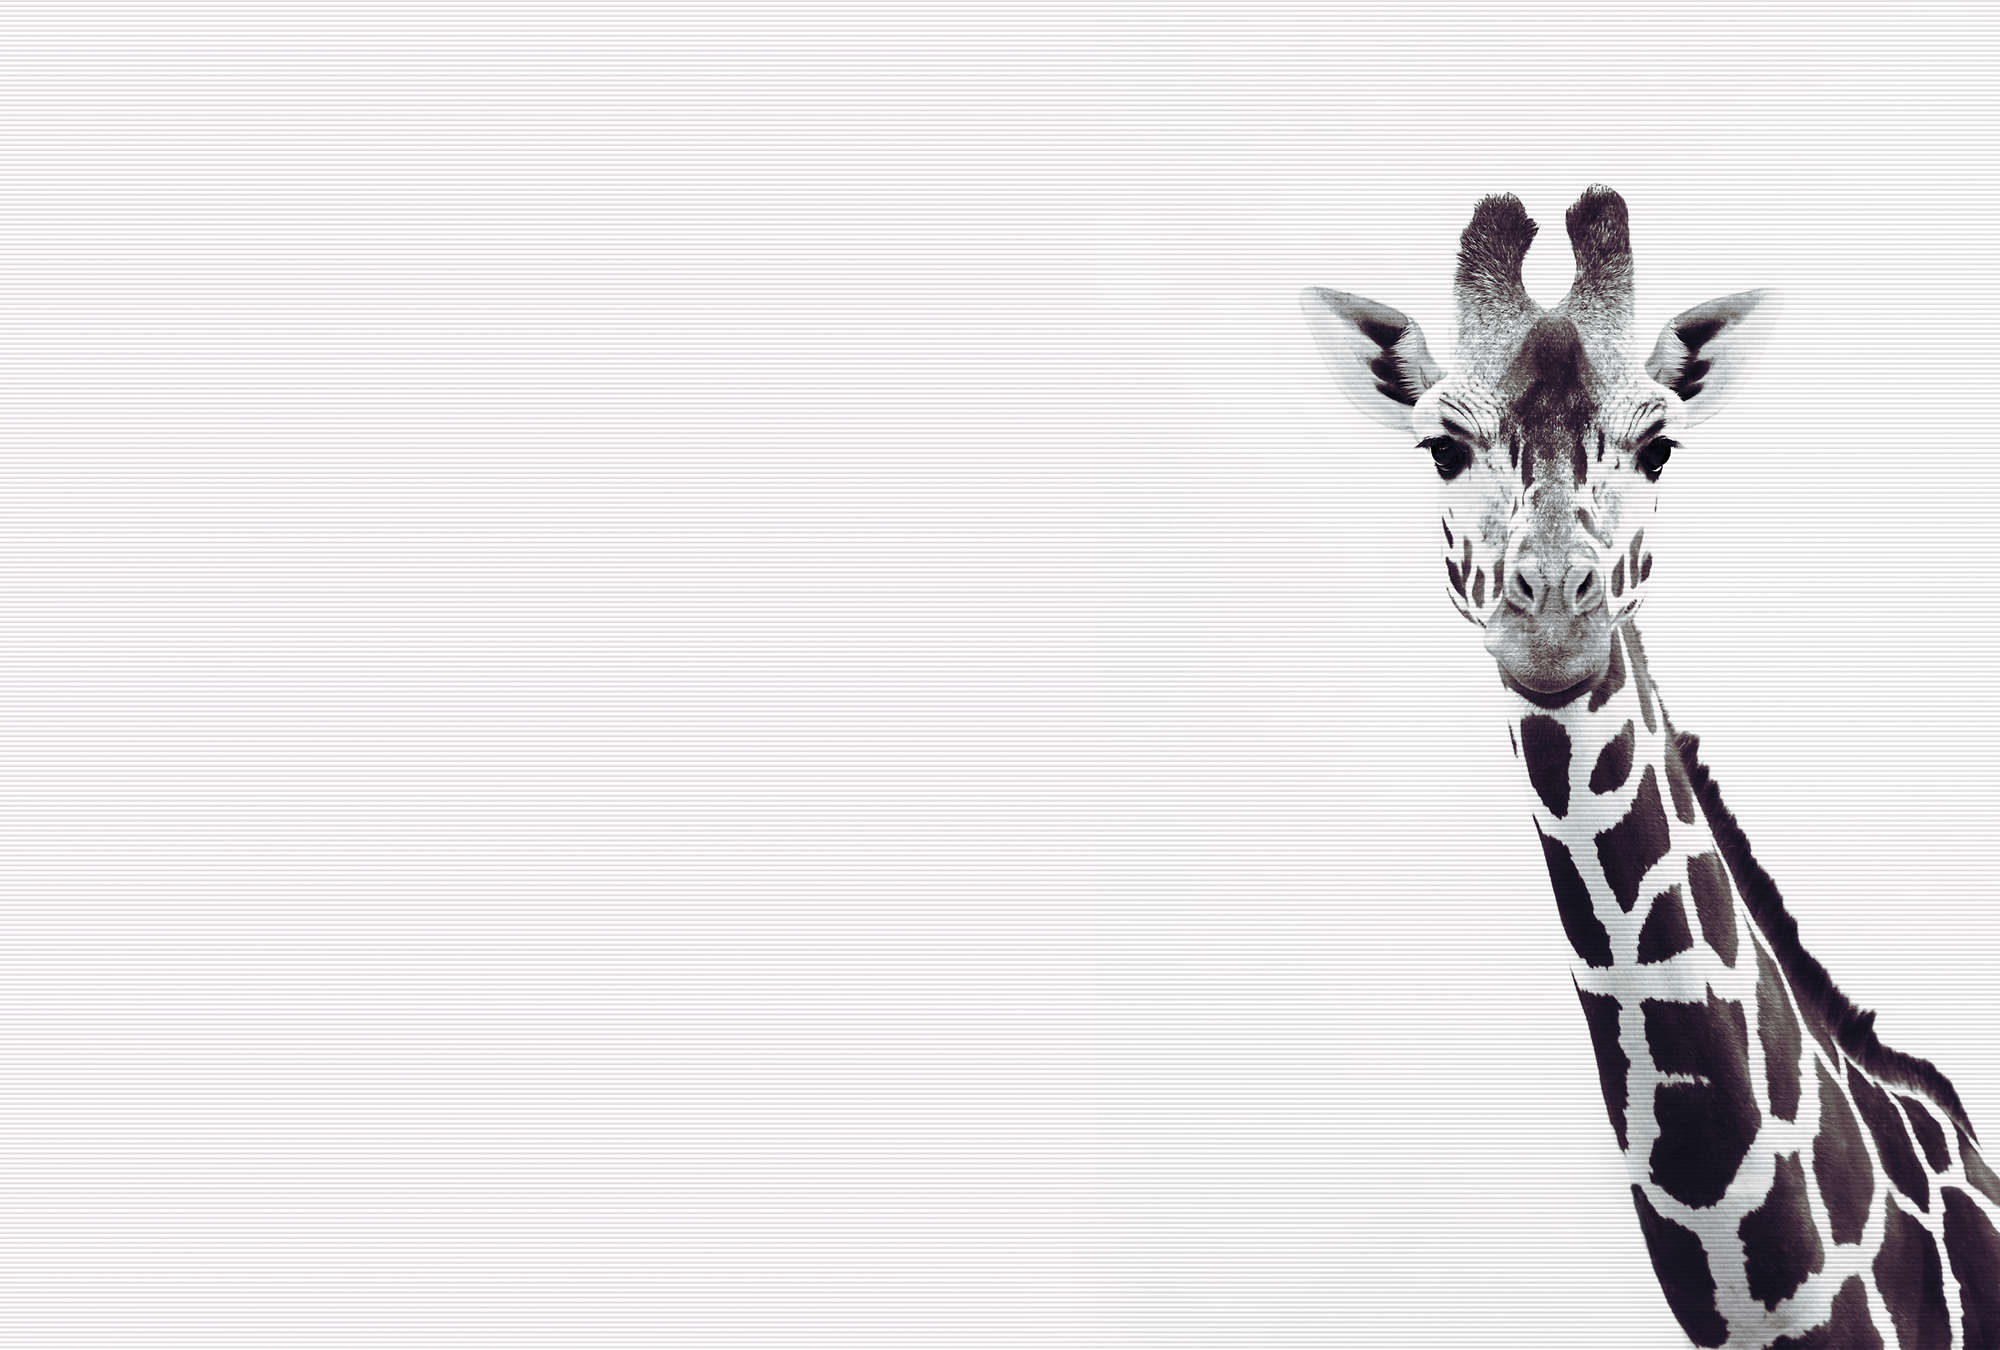             Giraffe murali in bianco e nero XXL
        